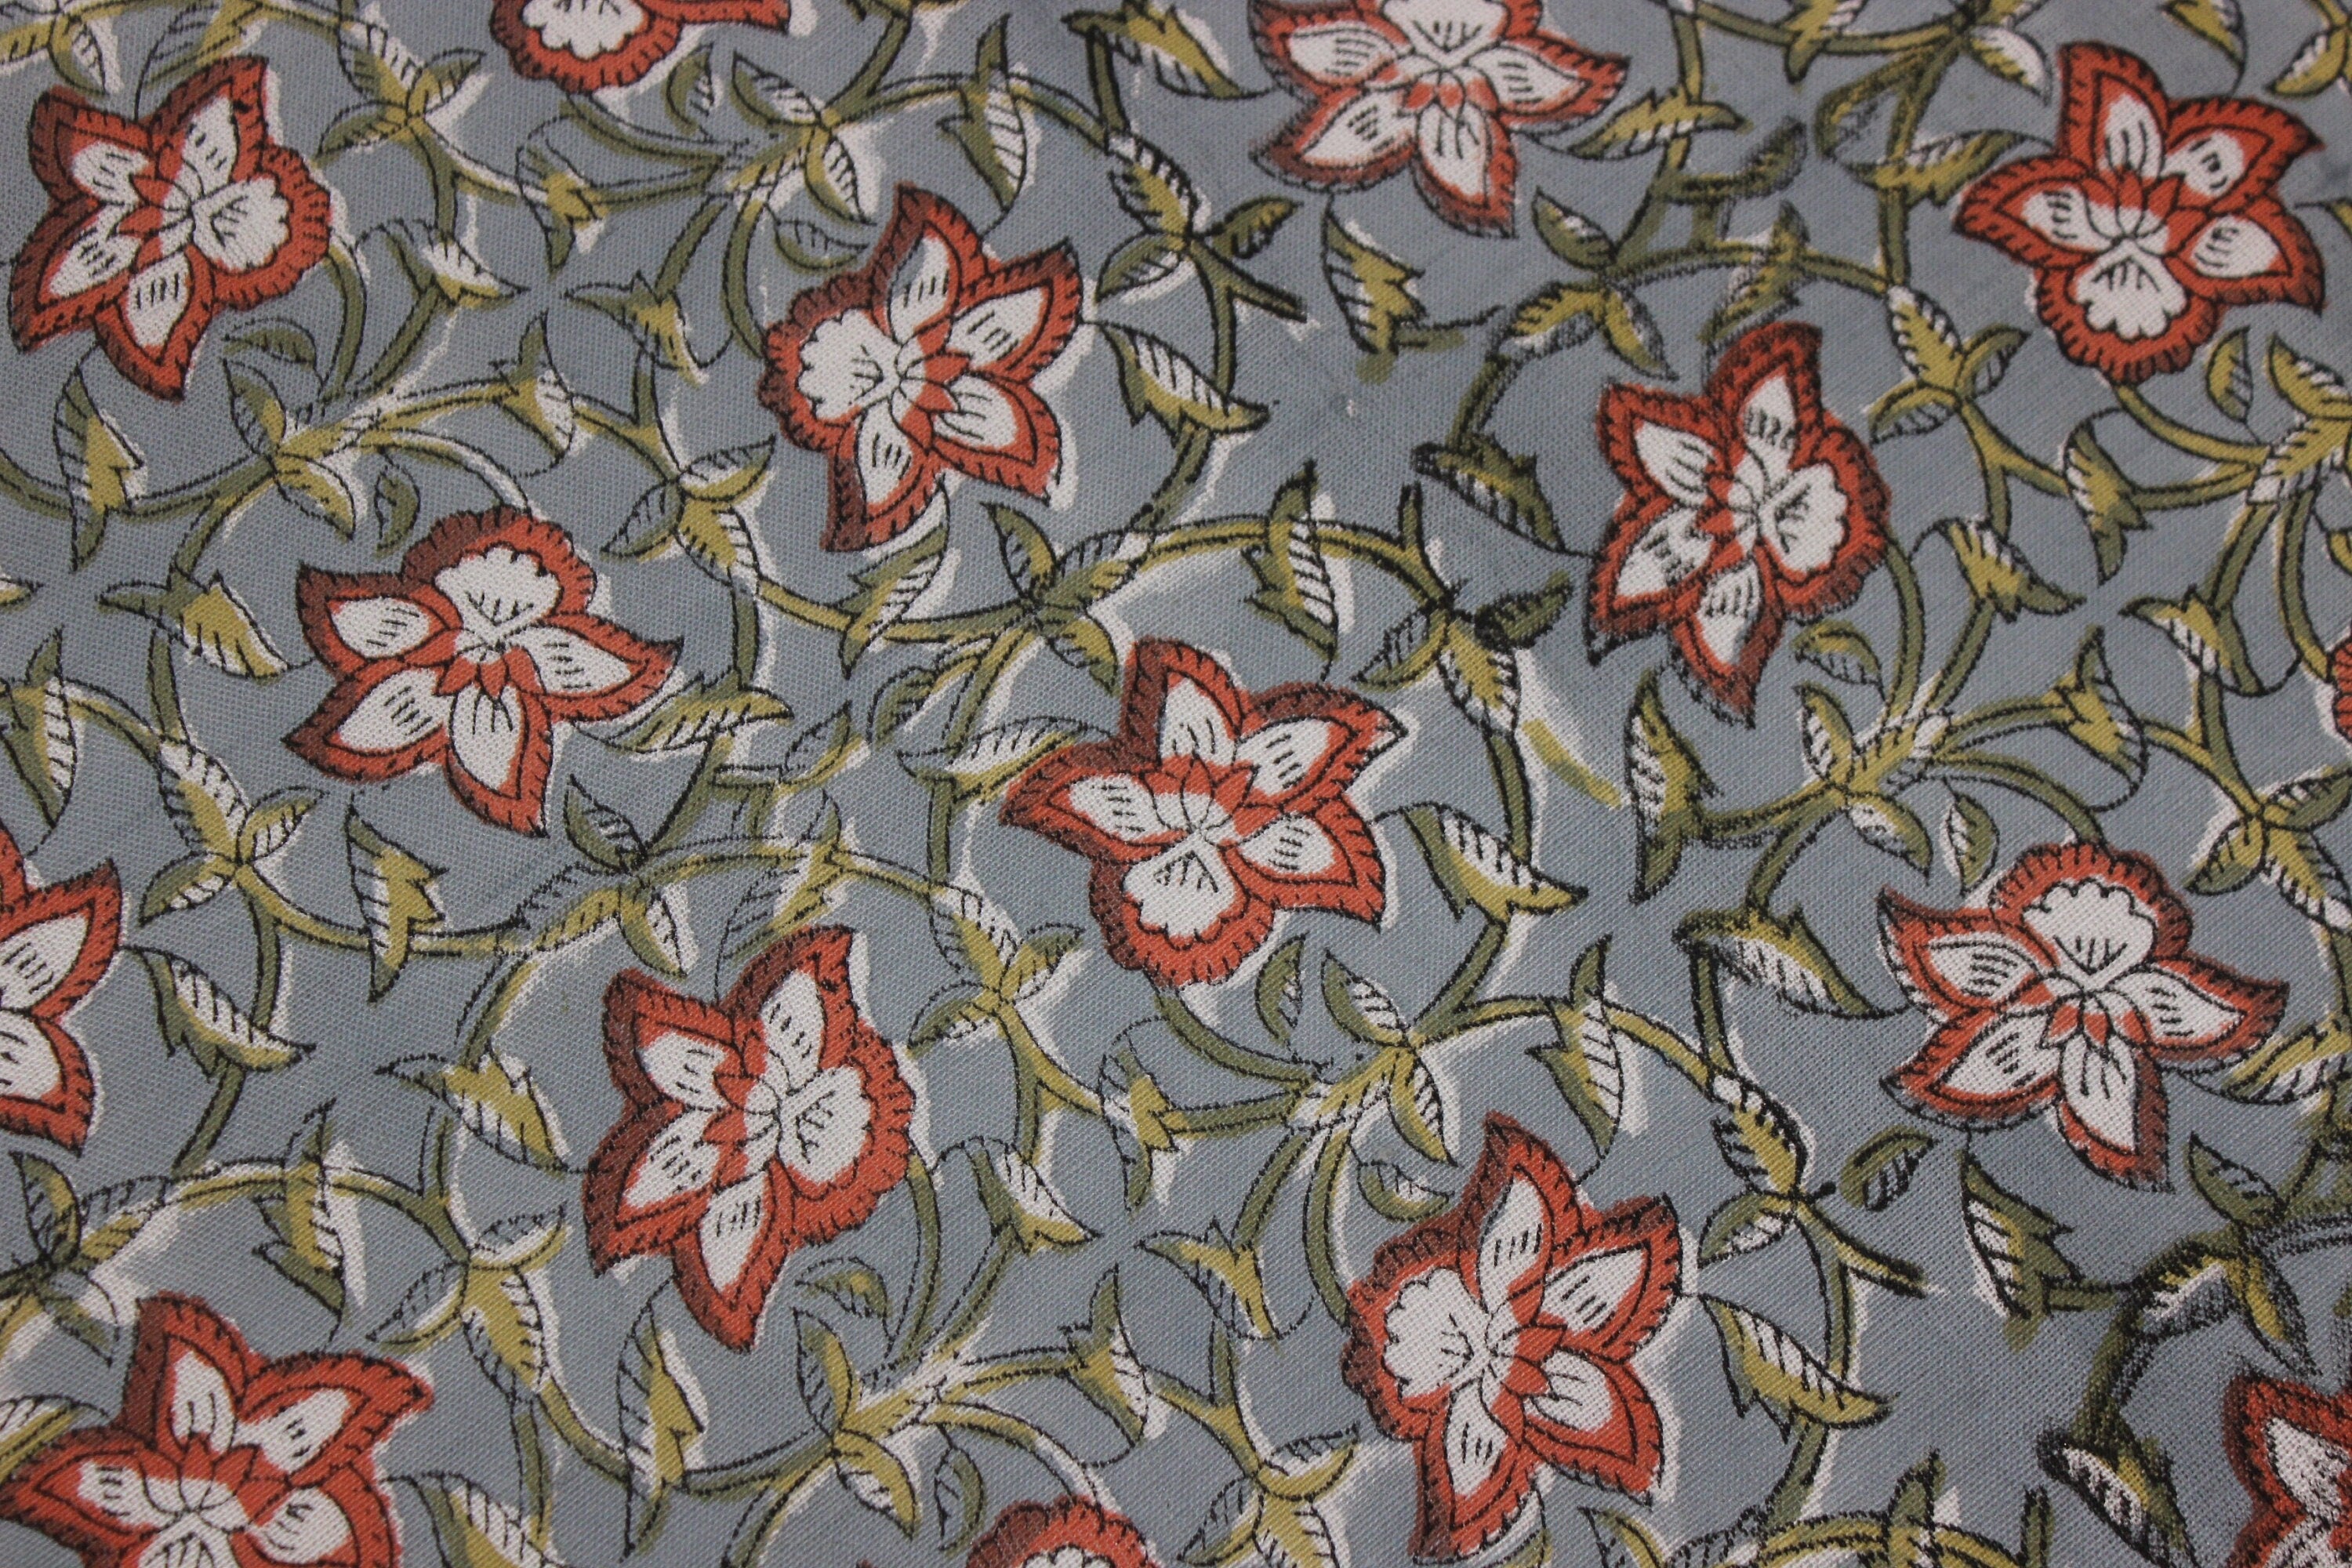 Chudamani  Beautiful Floral Hand Block Print  On Indian Linen & Cotton Fabrics By The Yard